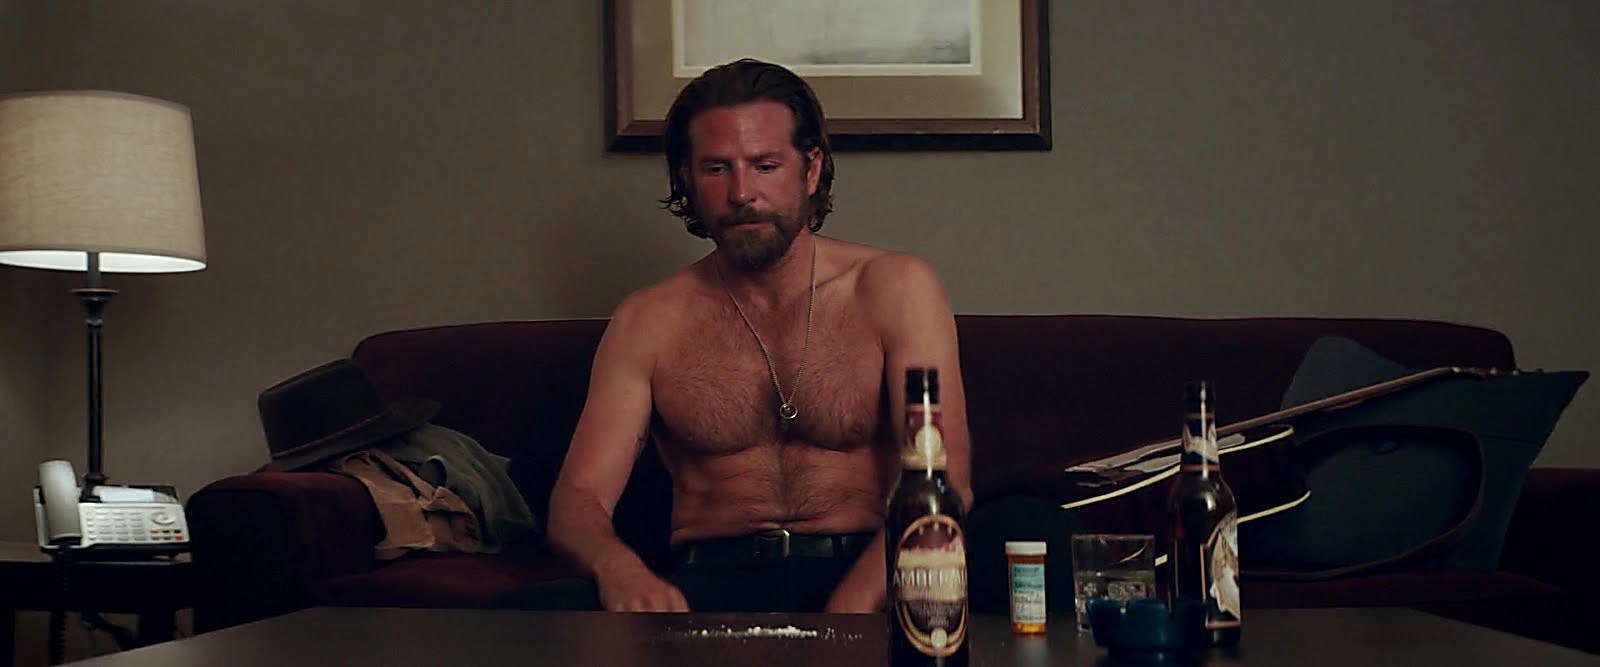 Bradley Cooper sexy shirtless scene January 20, 2019, 8am